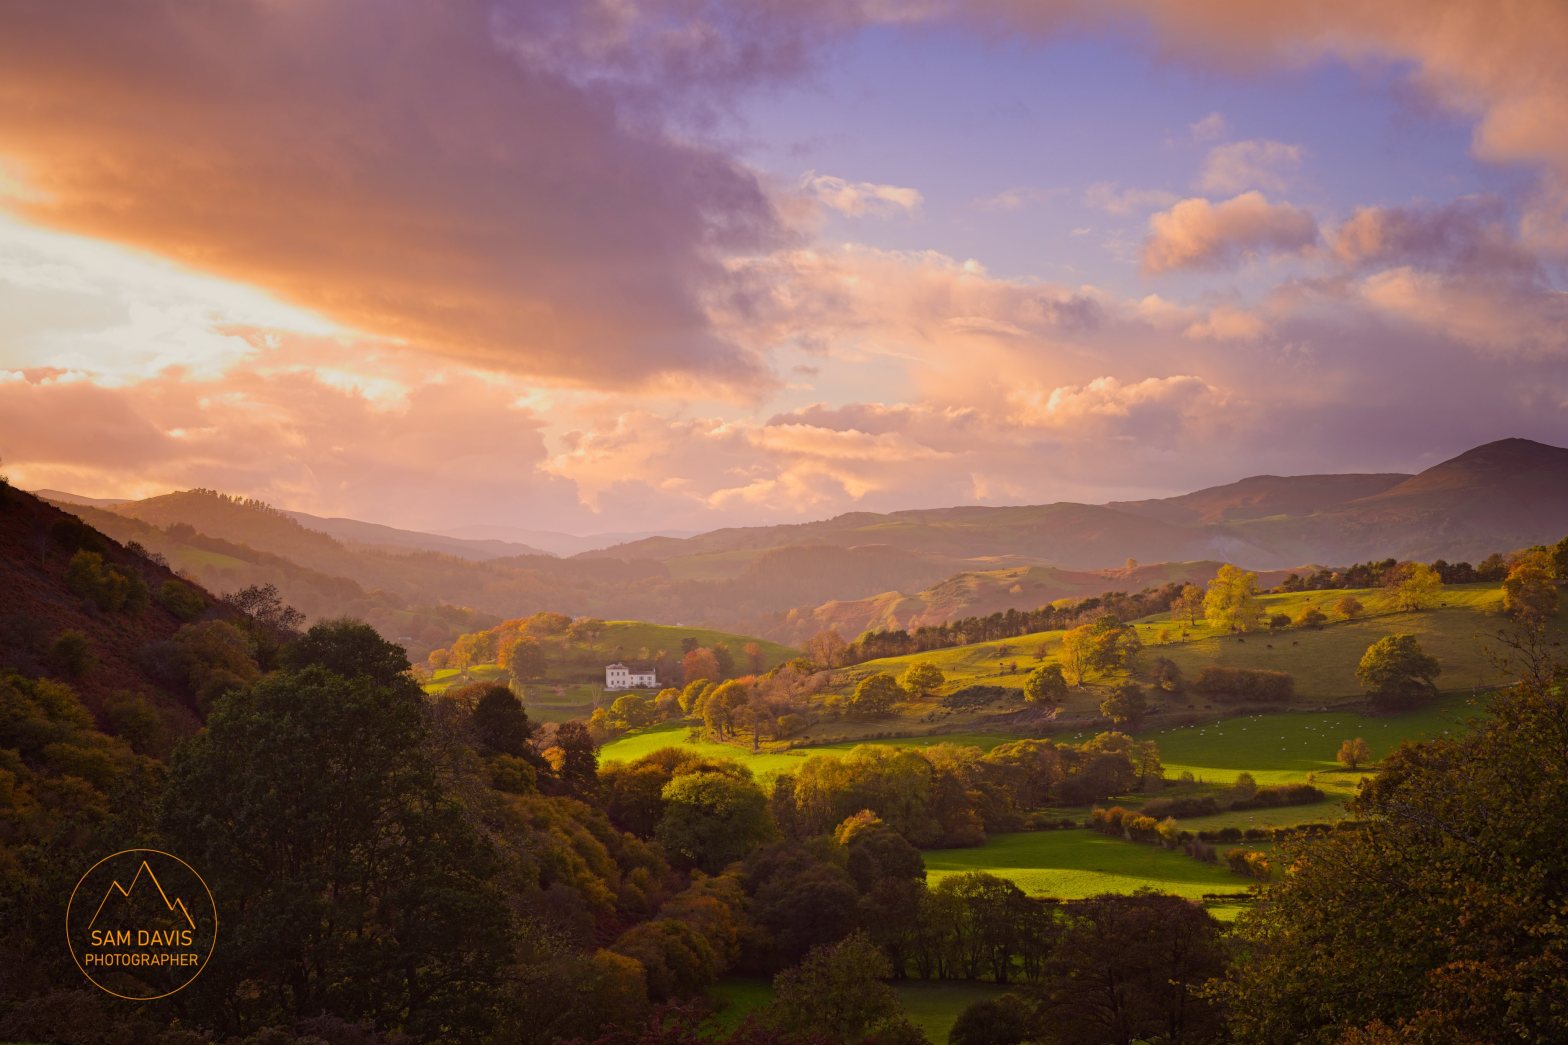 Vale of Llangollen, Wales by Sam Davis Photographer